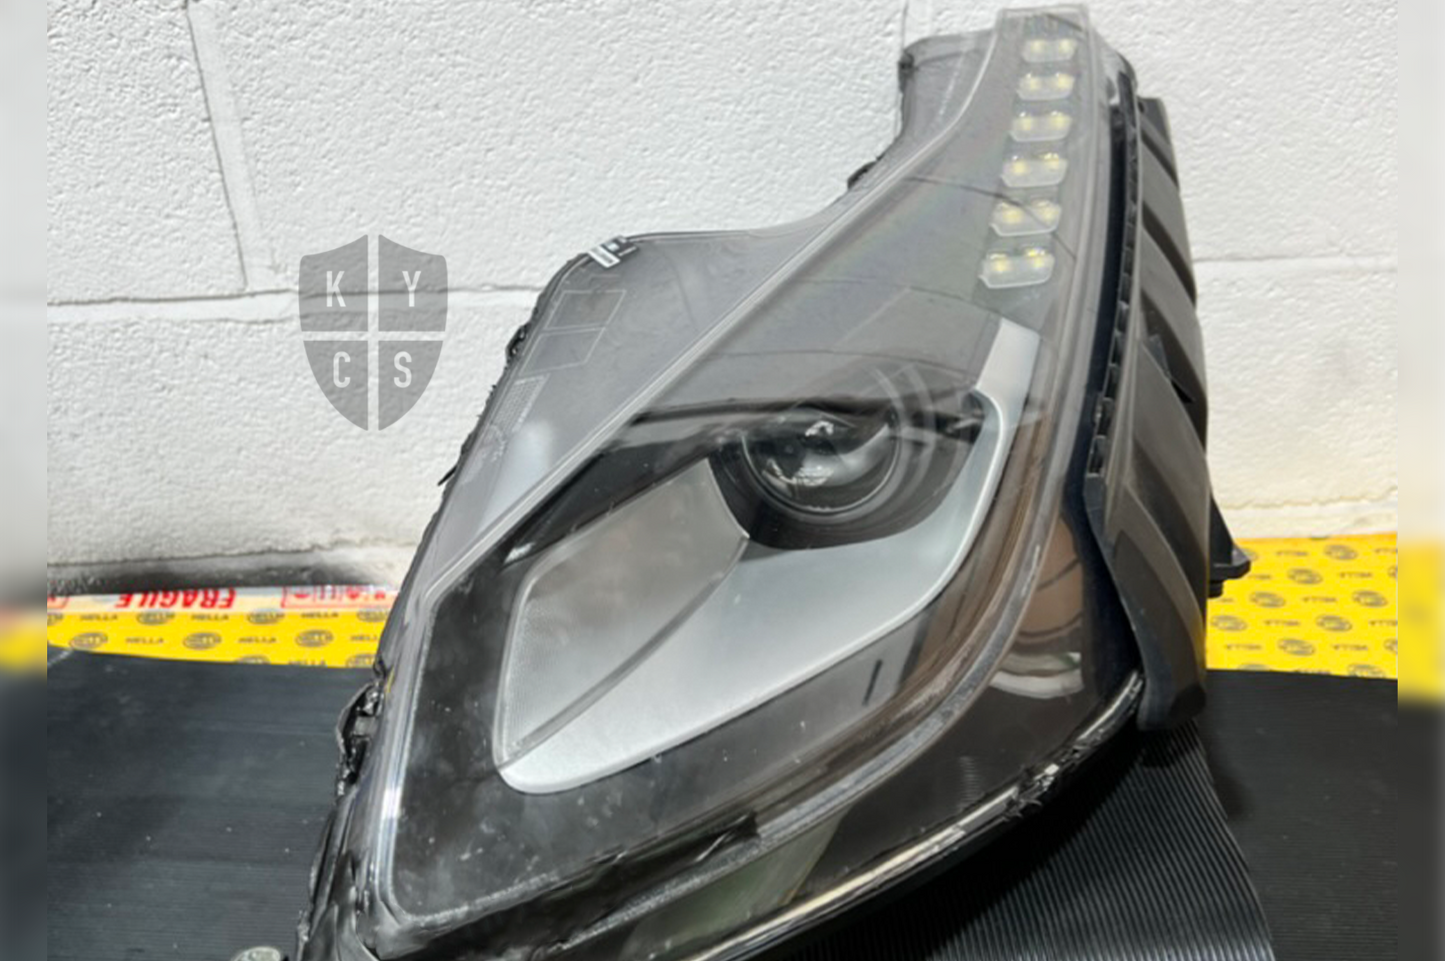 Ferrari Headlight Lens Replacement